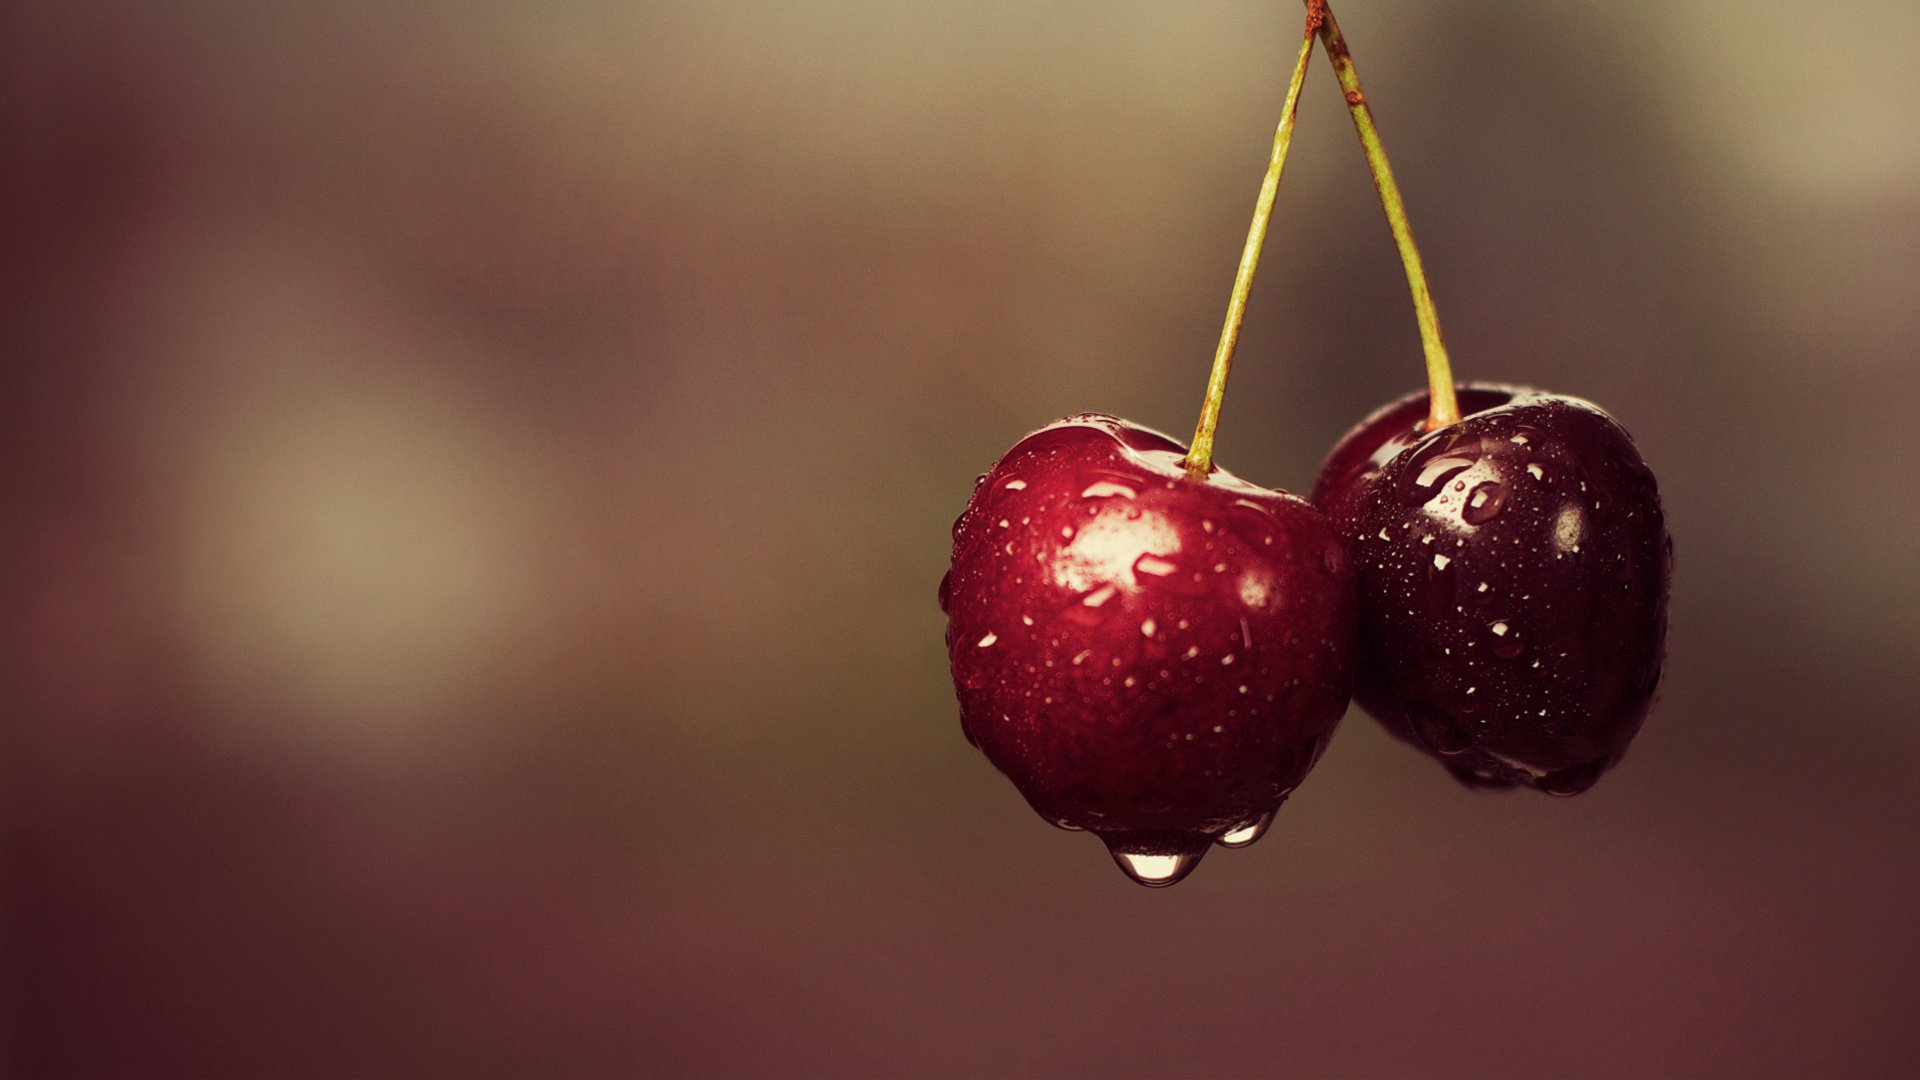 Two ripe cherries with raindrops